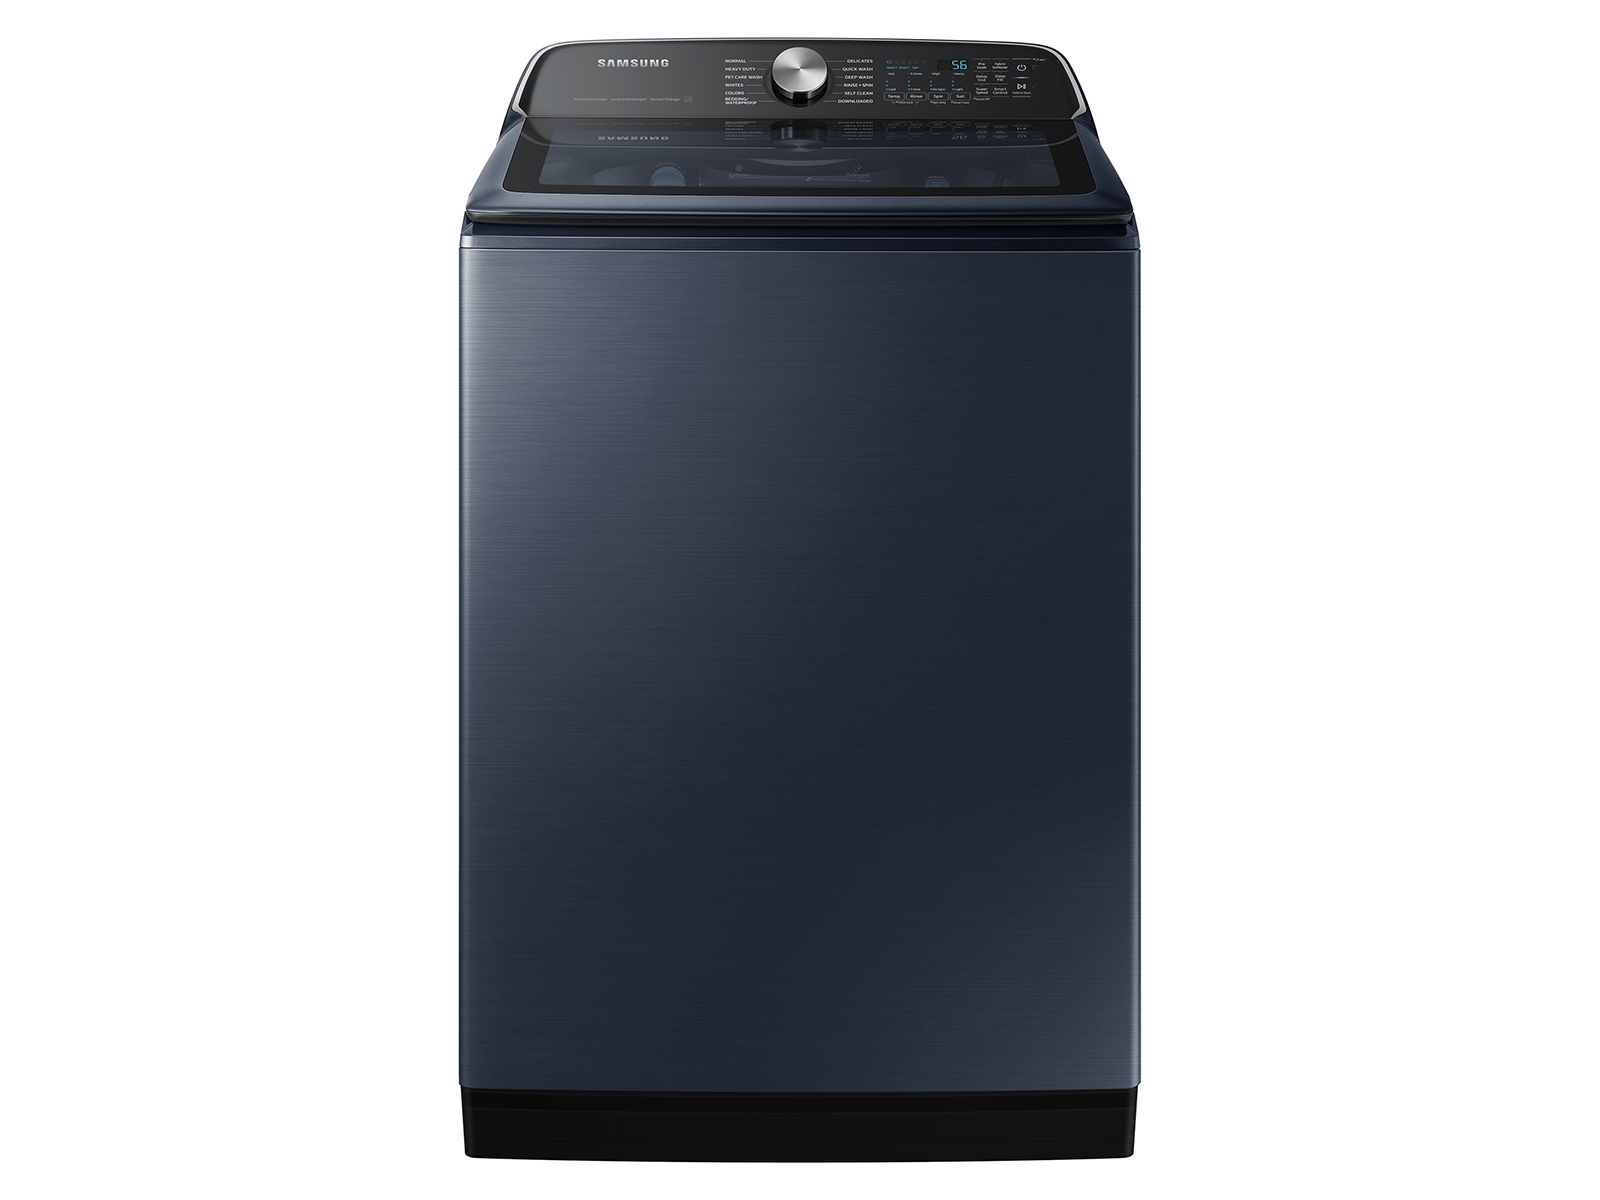 Samsung top load washing machine cleaning demo  How to clean samsung  washing machine 